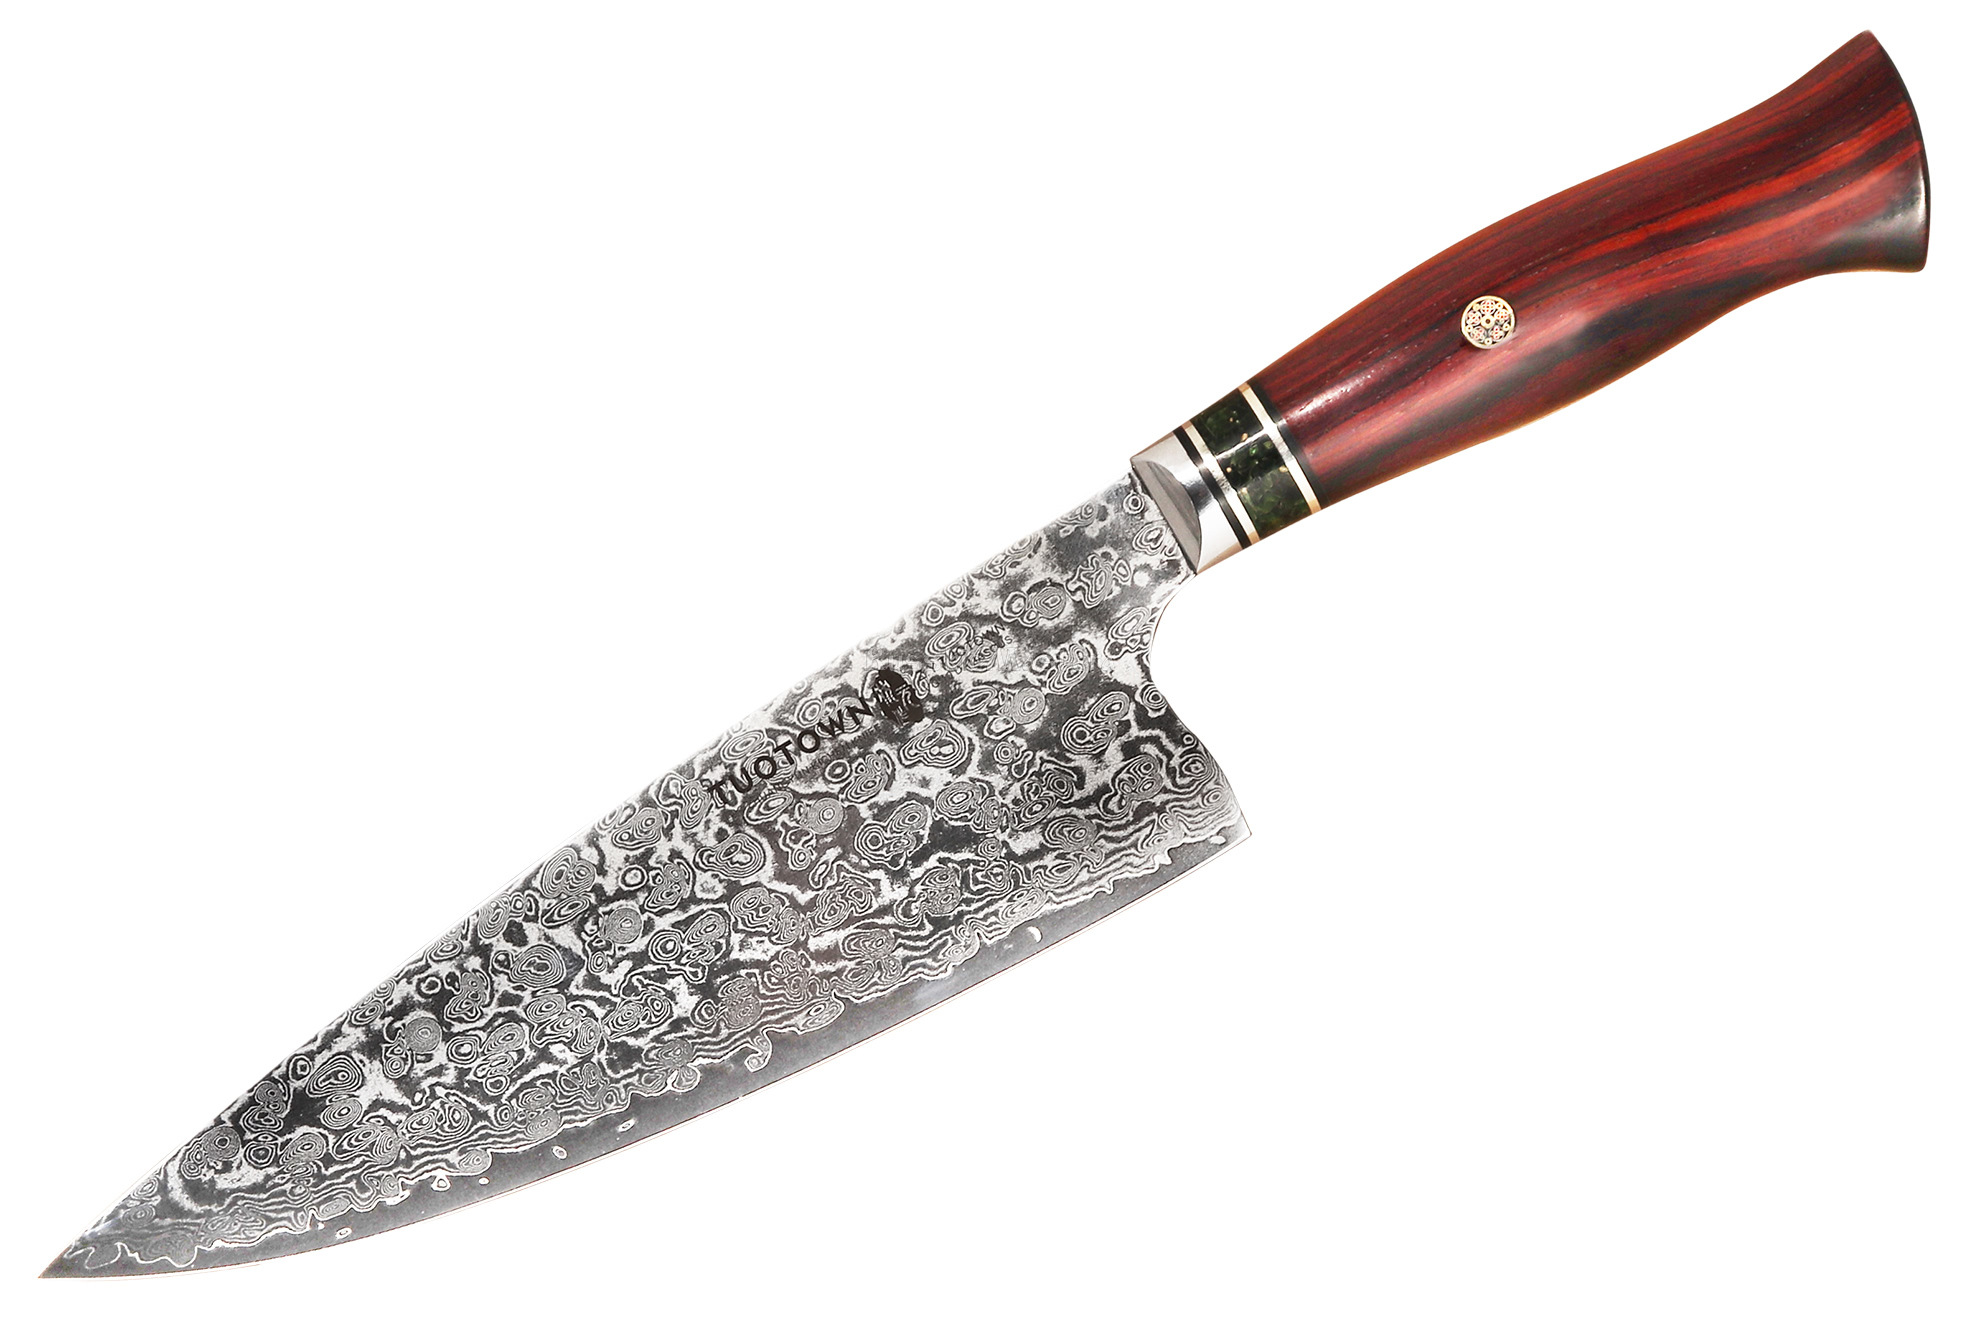 Кухонный Шеф-Нож TUOTOWN CH200 DM001, VG10 дамаск, рукоять стаб. древесина, 20 см.